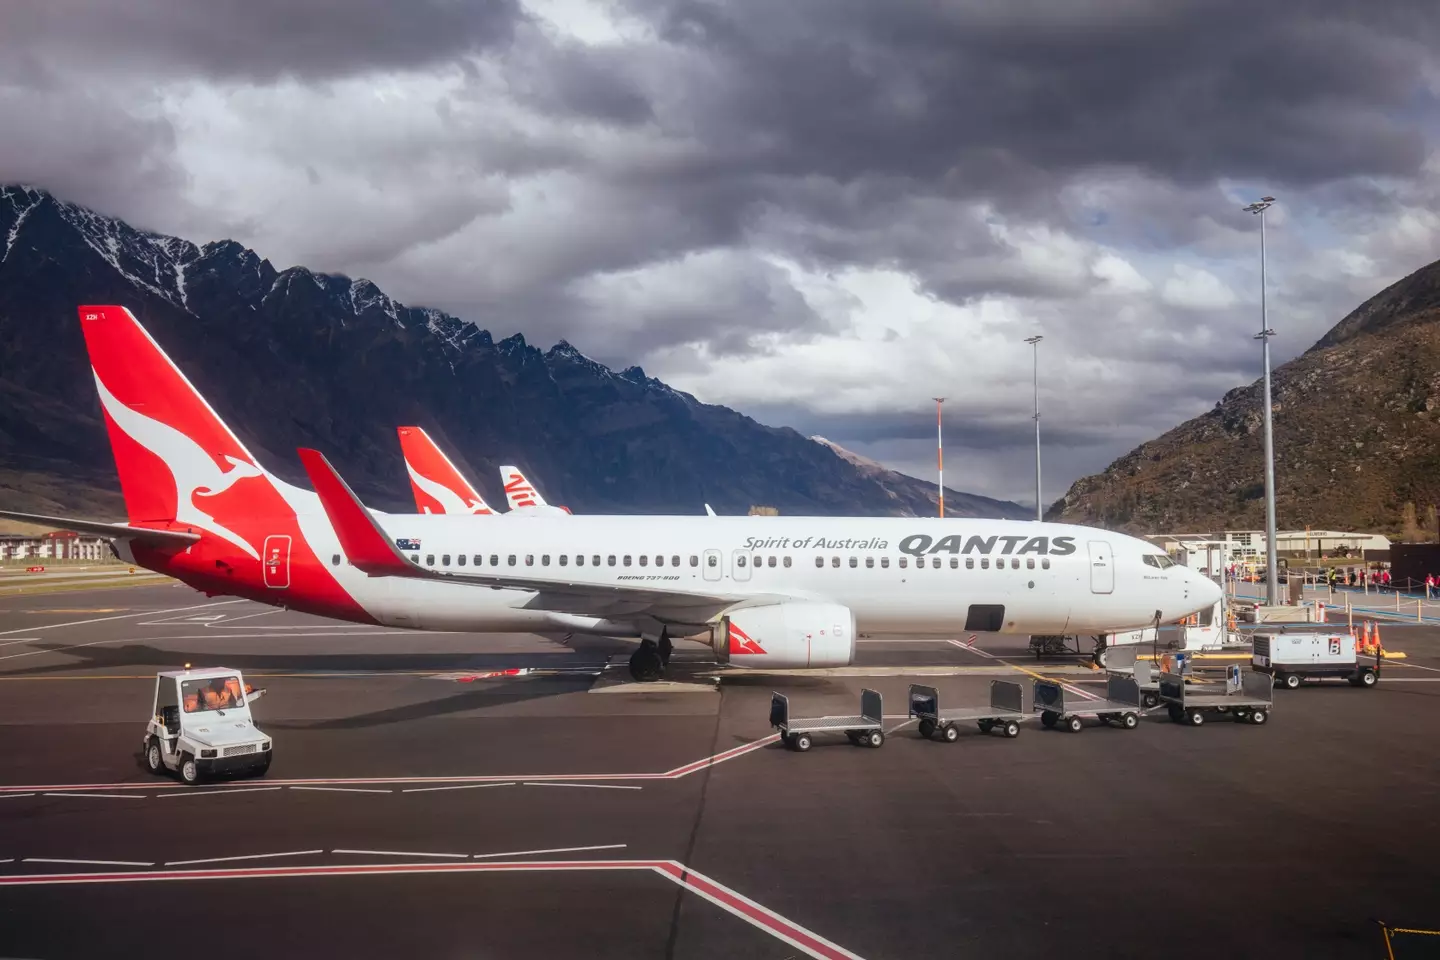 Qantas has since chosen New Zealand crews for the flights opposed to Australian.